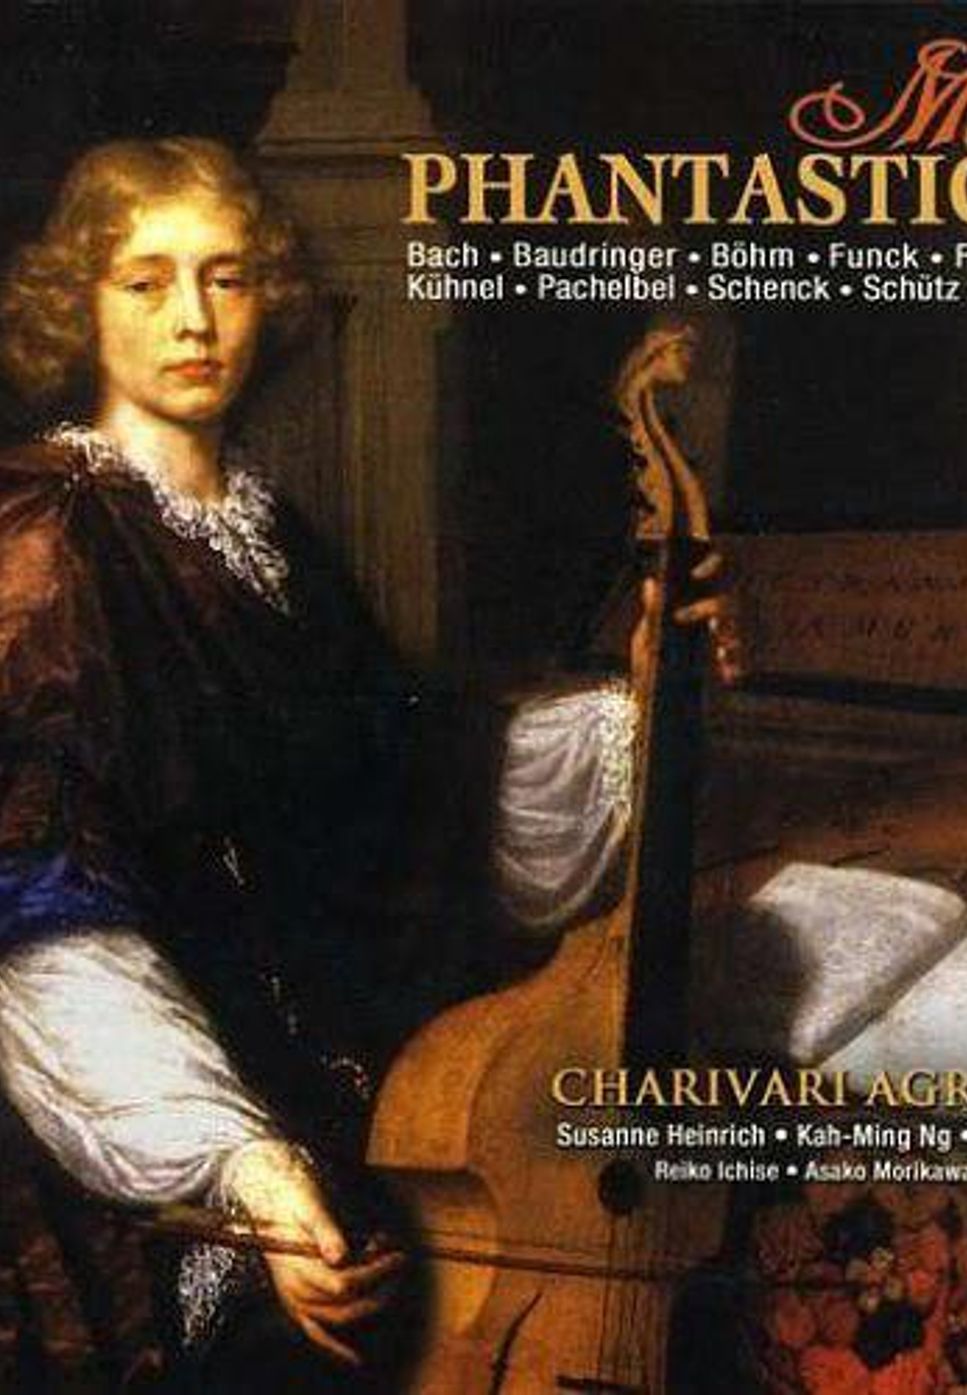 Georg Philipp Telemann - 4 Concerti for 4 Violins, TWV 40:201 - 204 (Telemann - String Quartet Original Complete Score and Parts) by poon